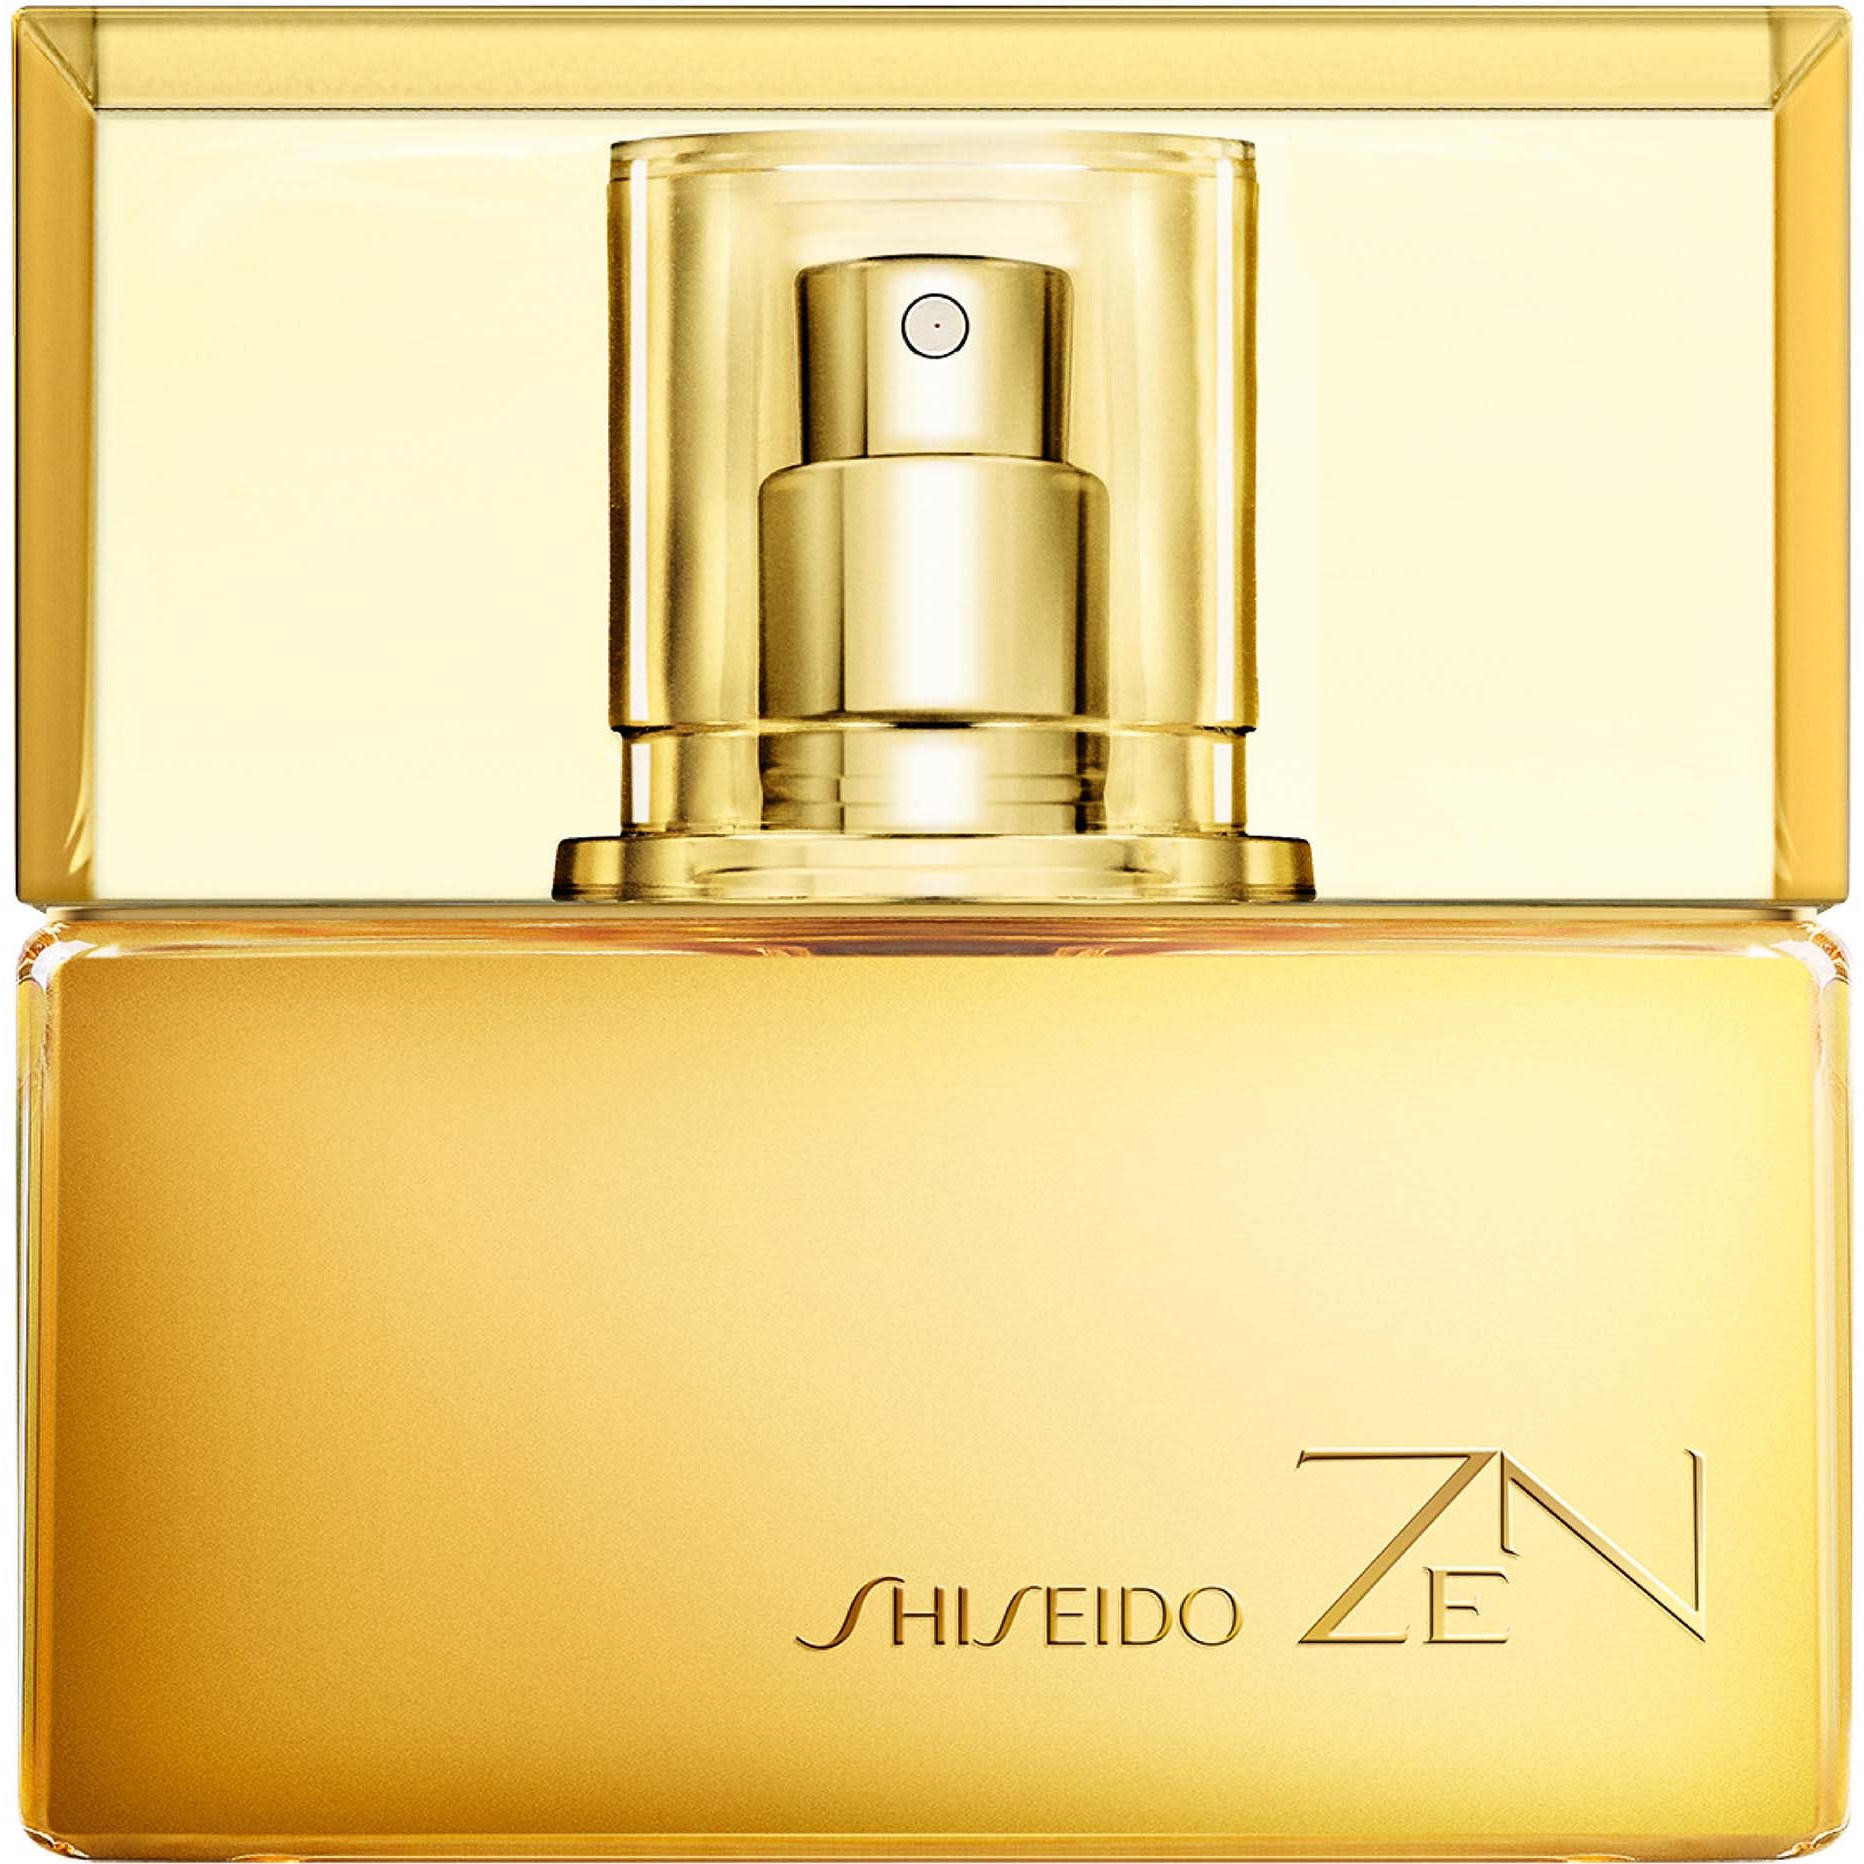 Shiseido Zen EdP 30ml